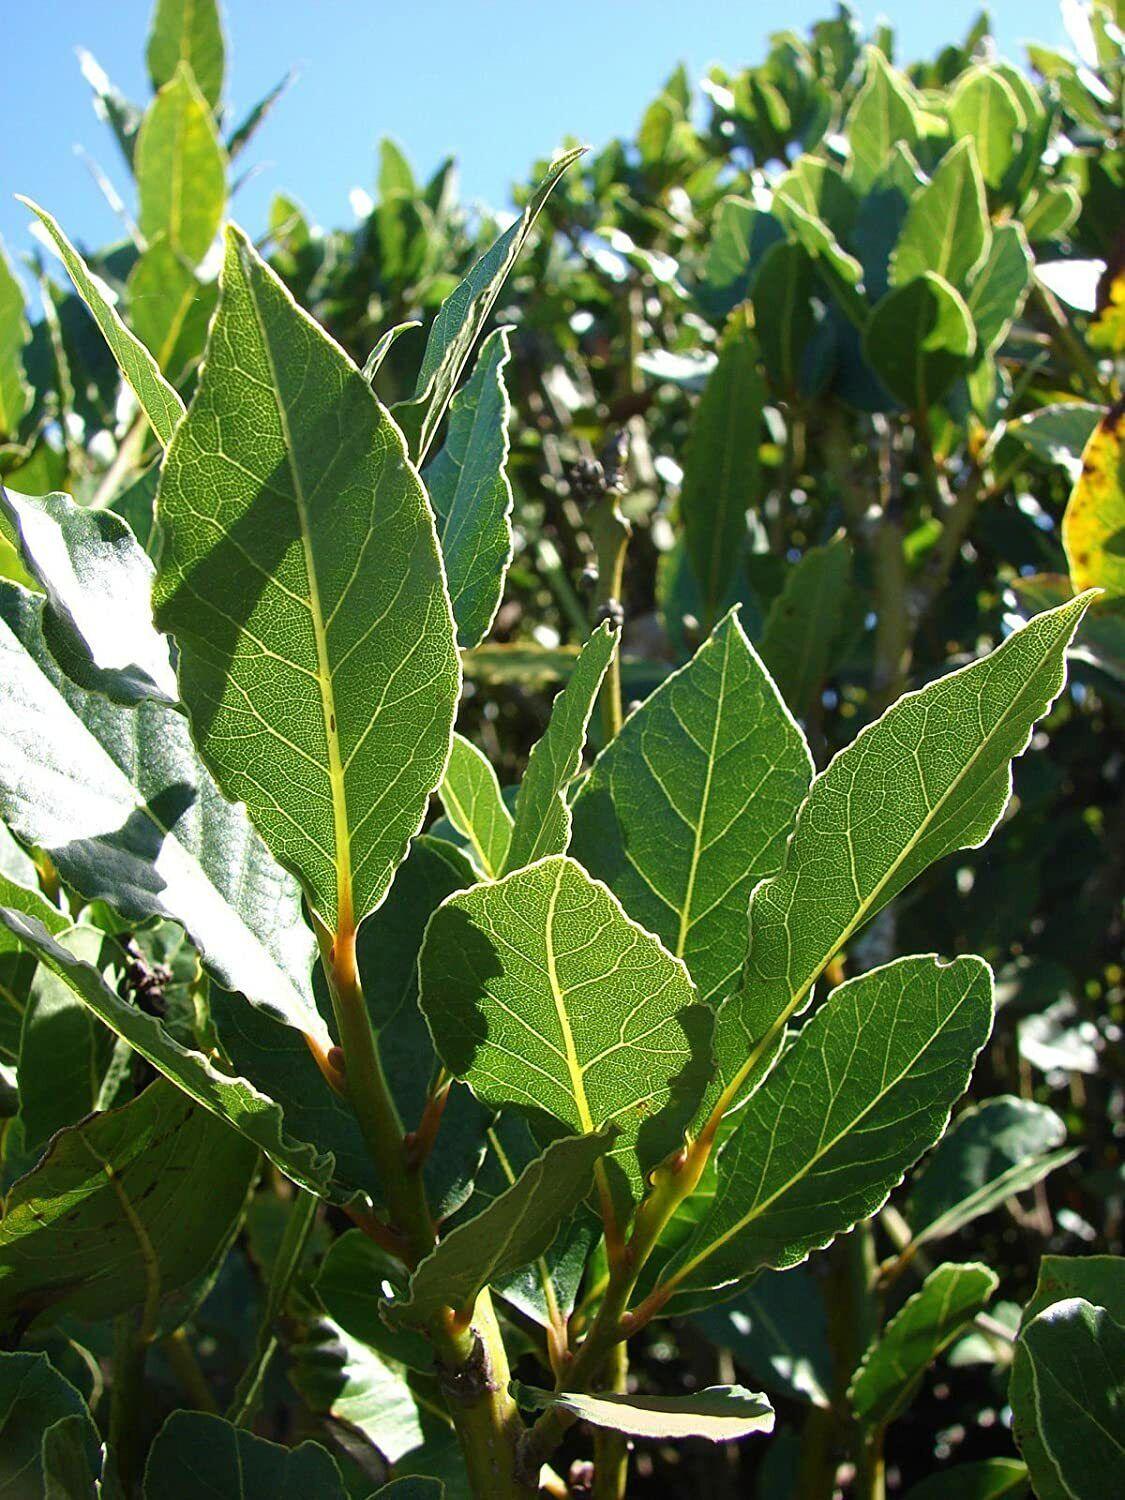 Bay Leaf Tree - 5-6" Tall Live Plant - Sweet Bay, Grecian Laurel, Laurus nobilis - The Nursery Center